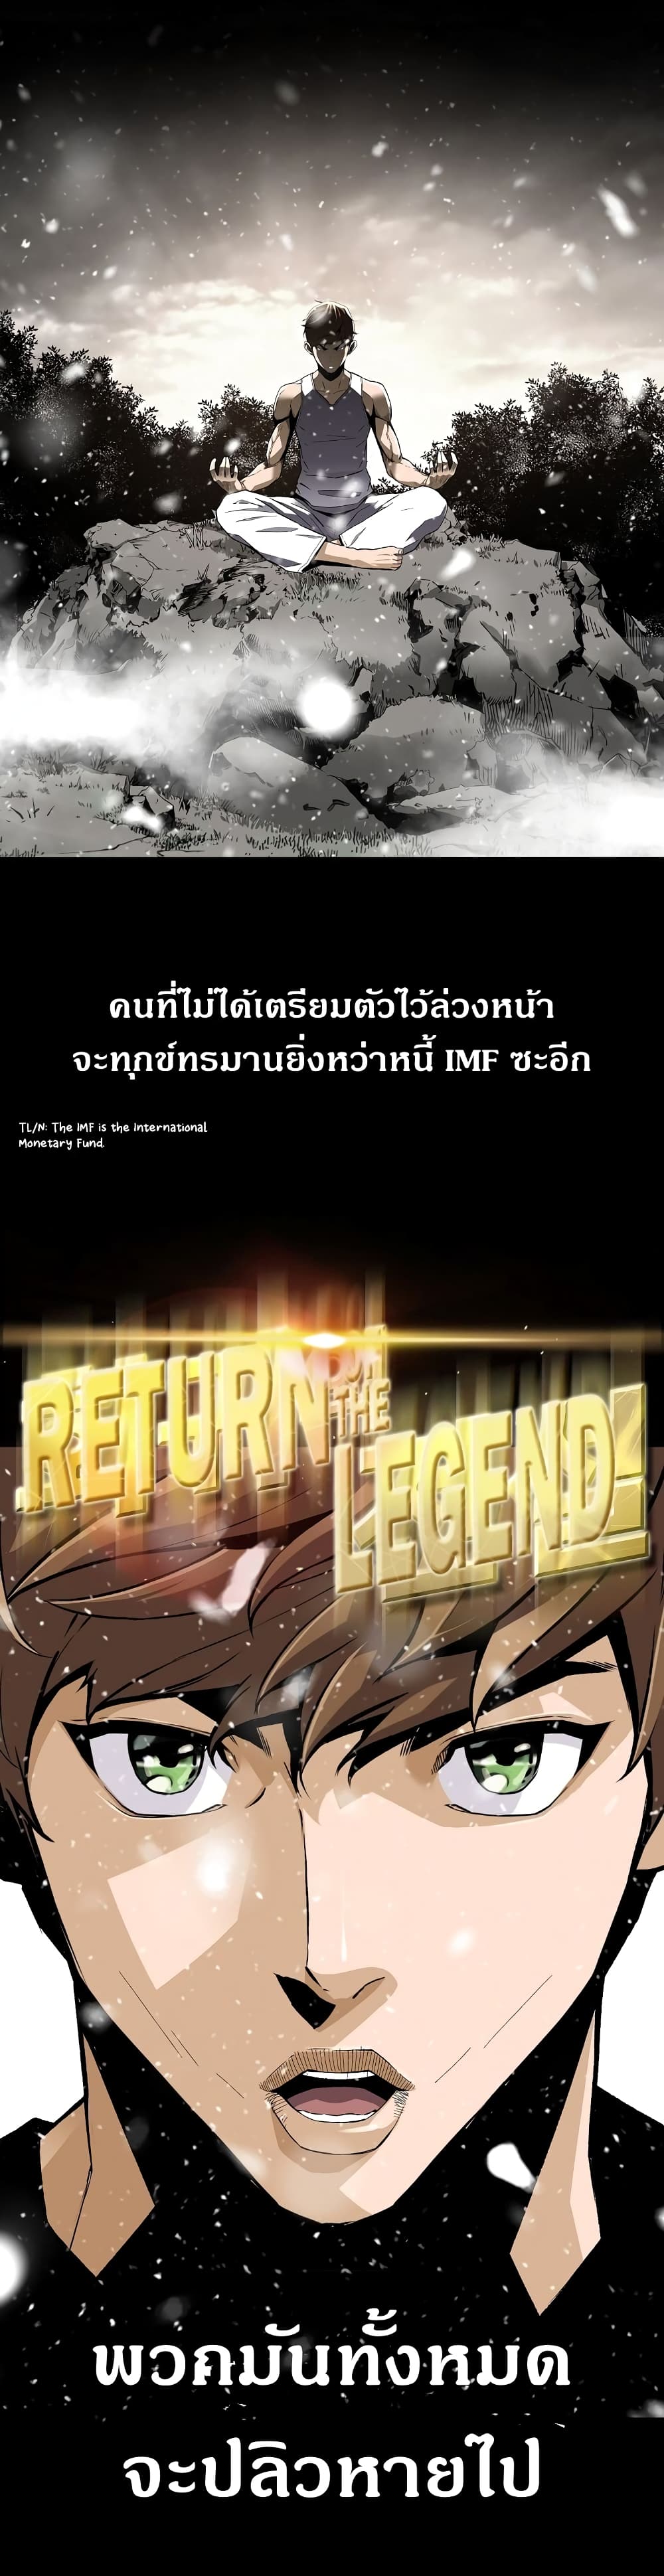 Return of the Legend45 (3)